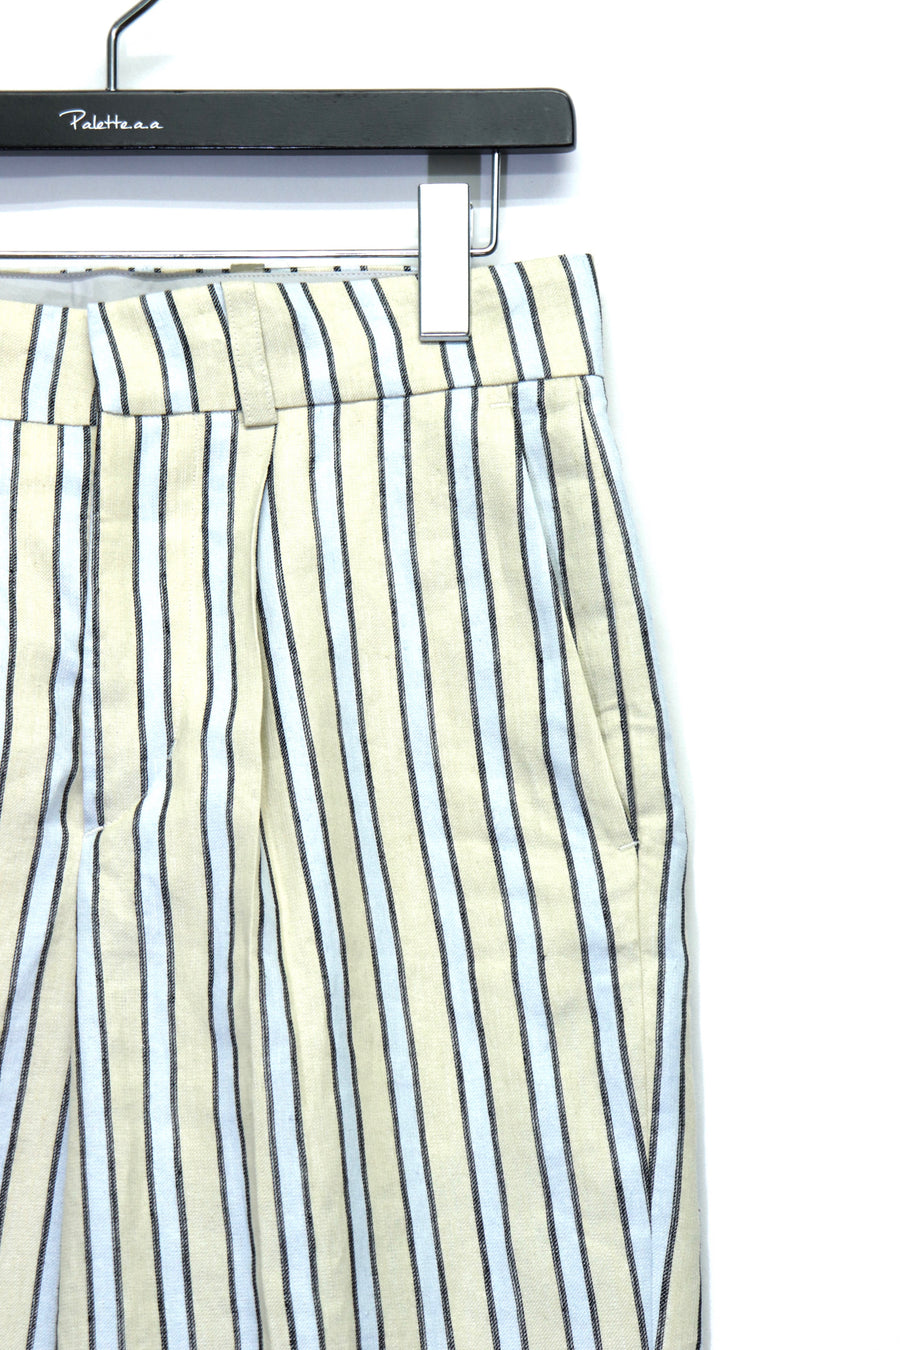 Nobuyuki Matsui  Bell Slacks(stripe)